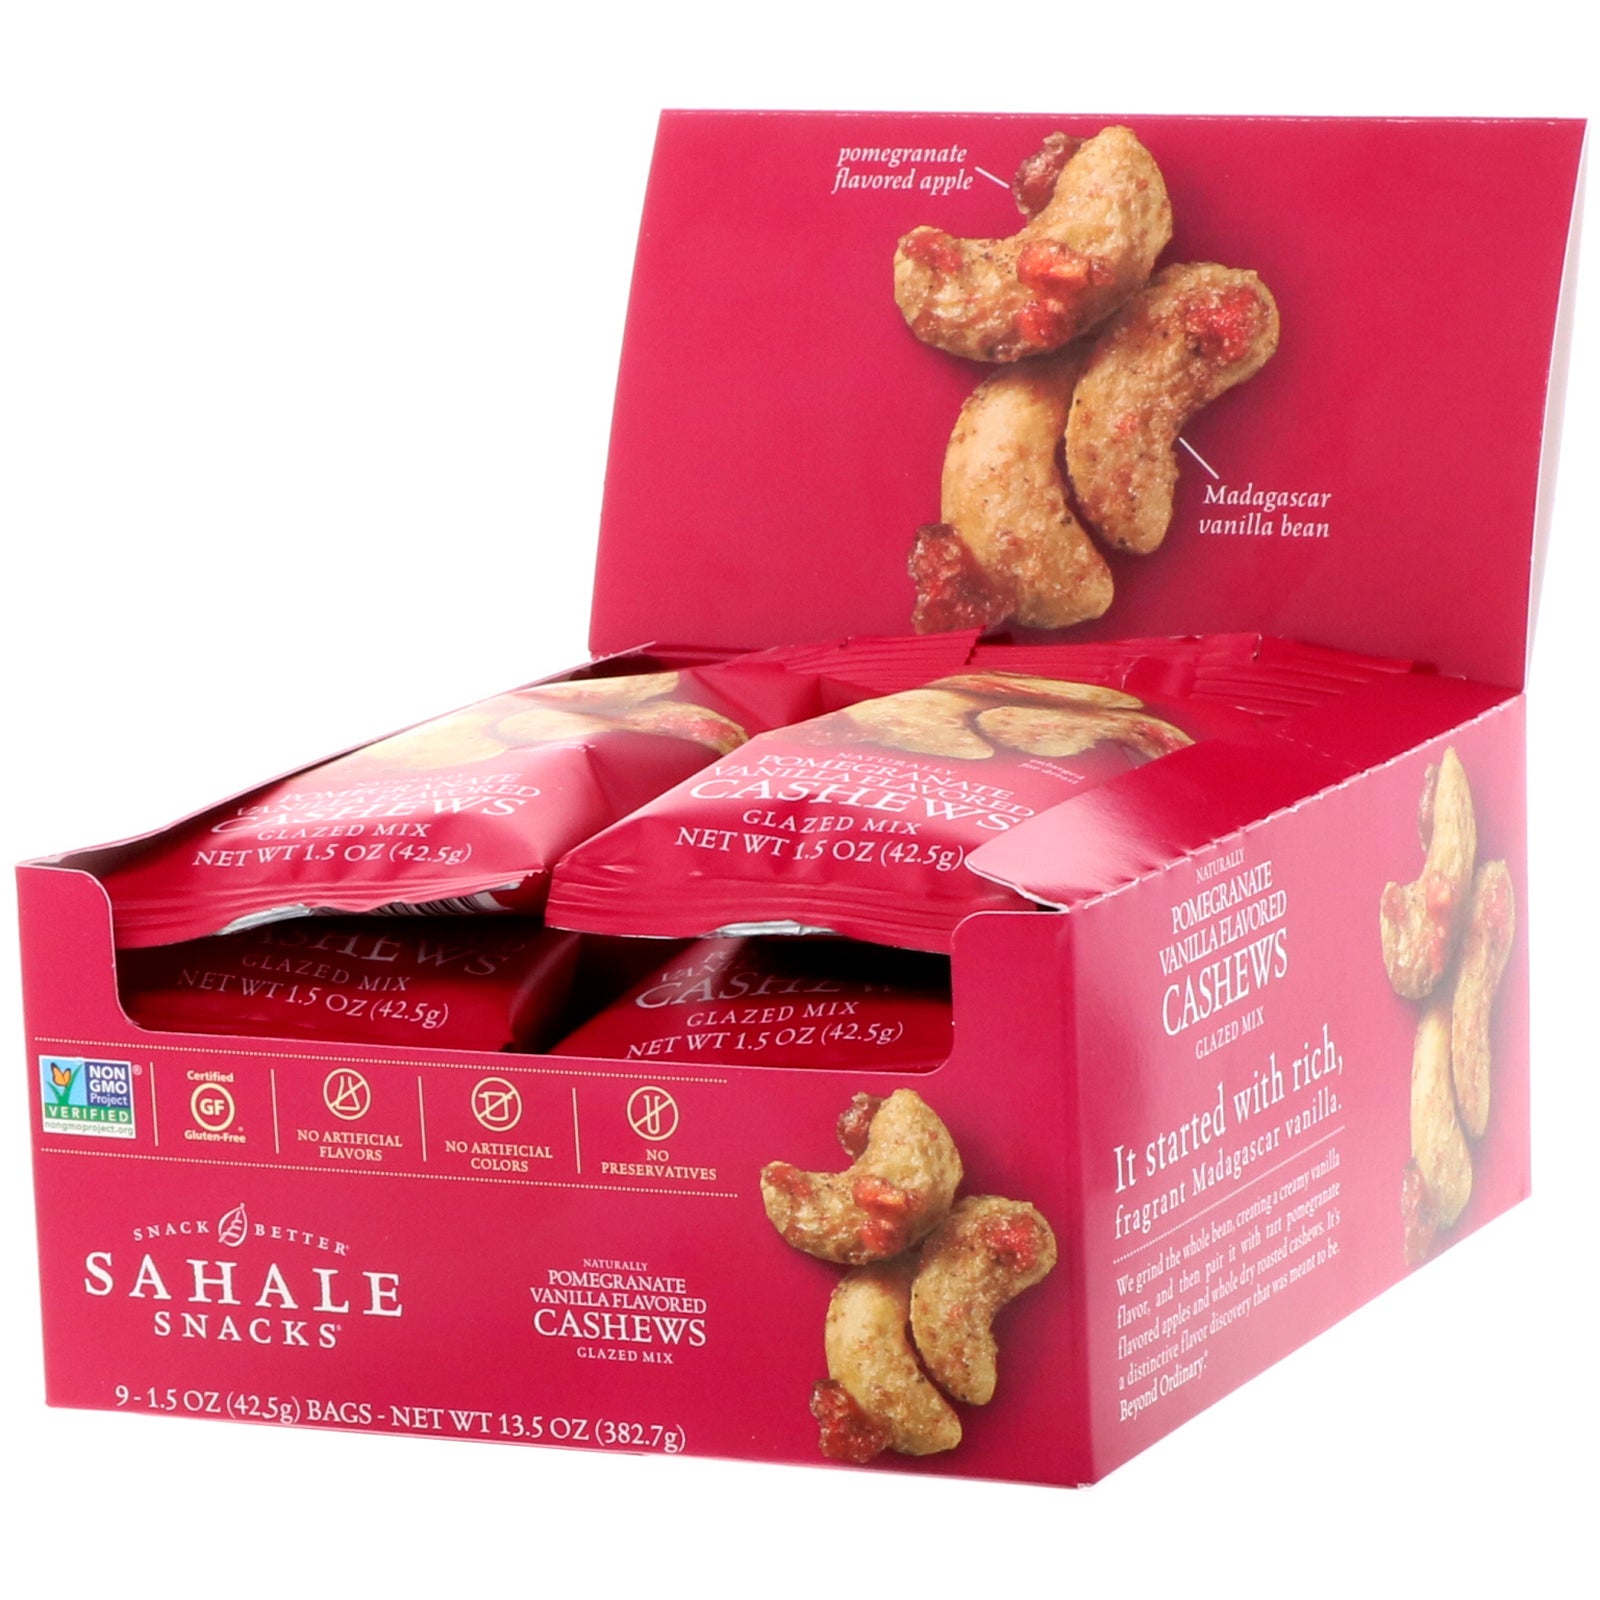 Sahale Snacks, Pomegranate Vanilla Flavored Cashews, Glazed Mix, 9 Packs, 1.5 oz (42.5 g) Each